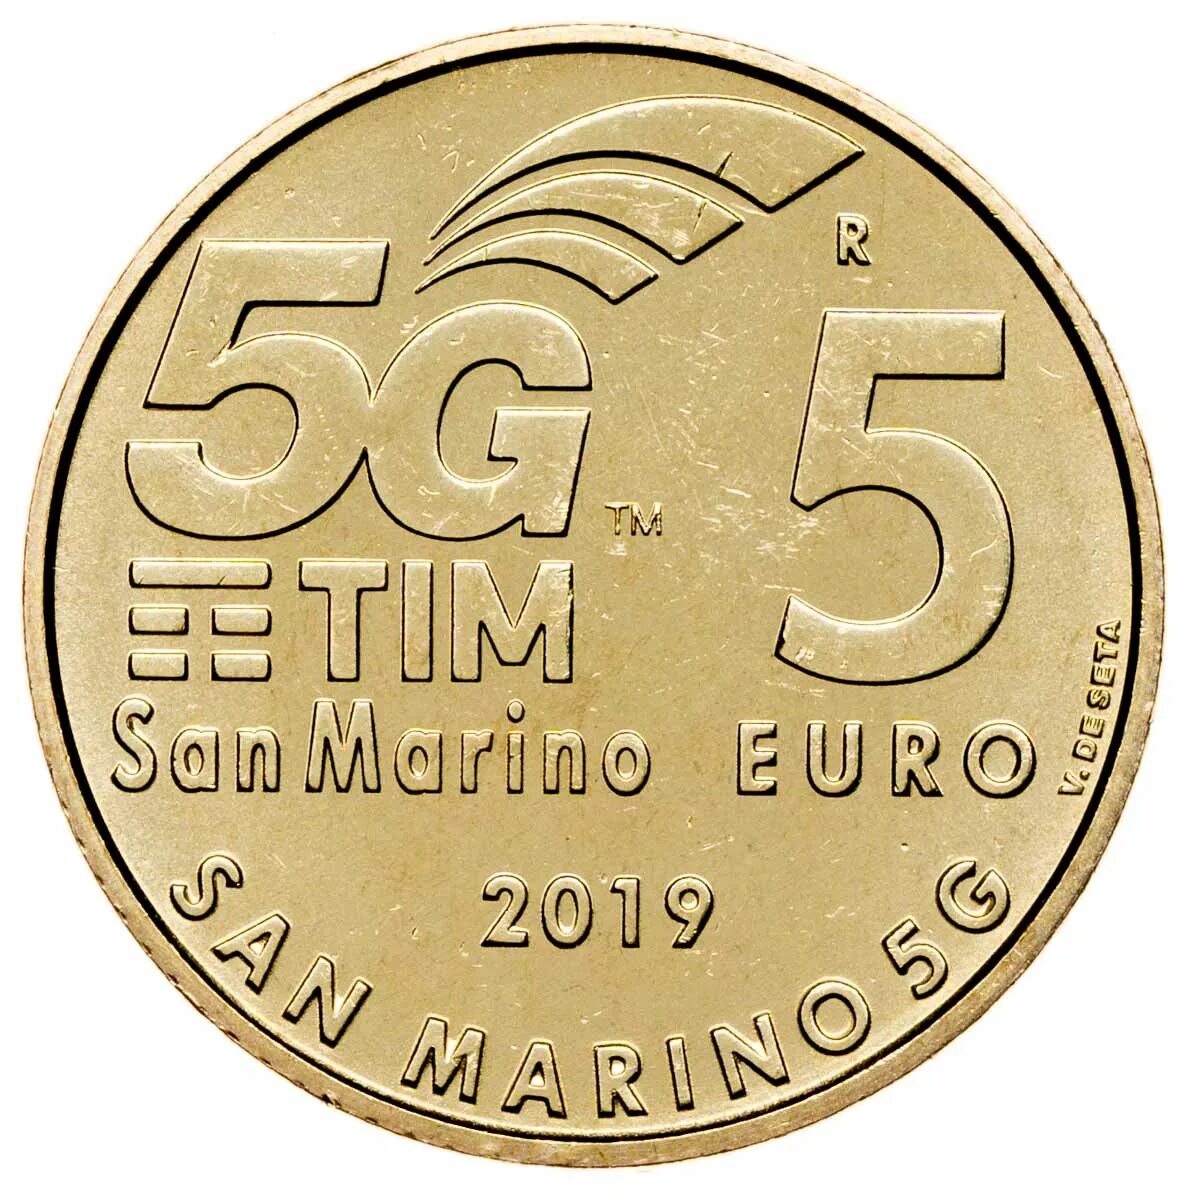 Сан-Марино, 2019 год, 5 евро, технология мобильной связи - 5g. 5 Евро Сан Марино. Валюта Сан Марино. 5 Евро 2019. Евро сан марино